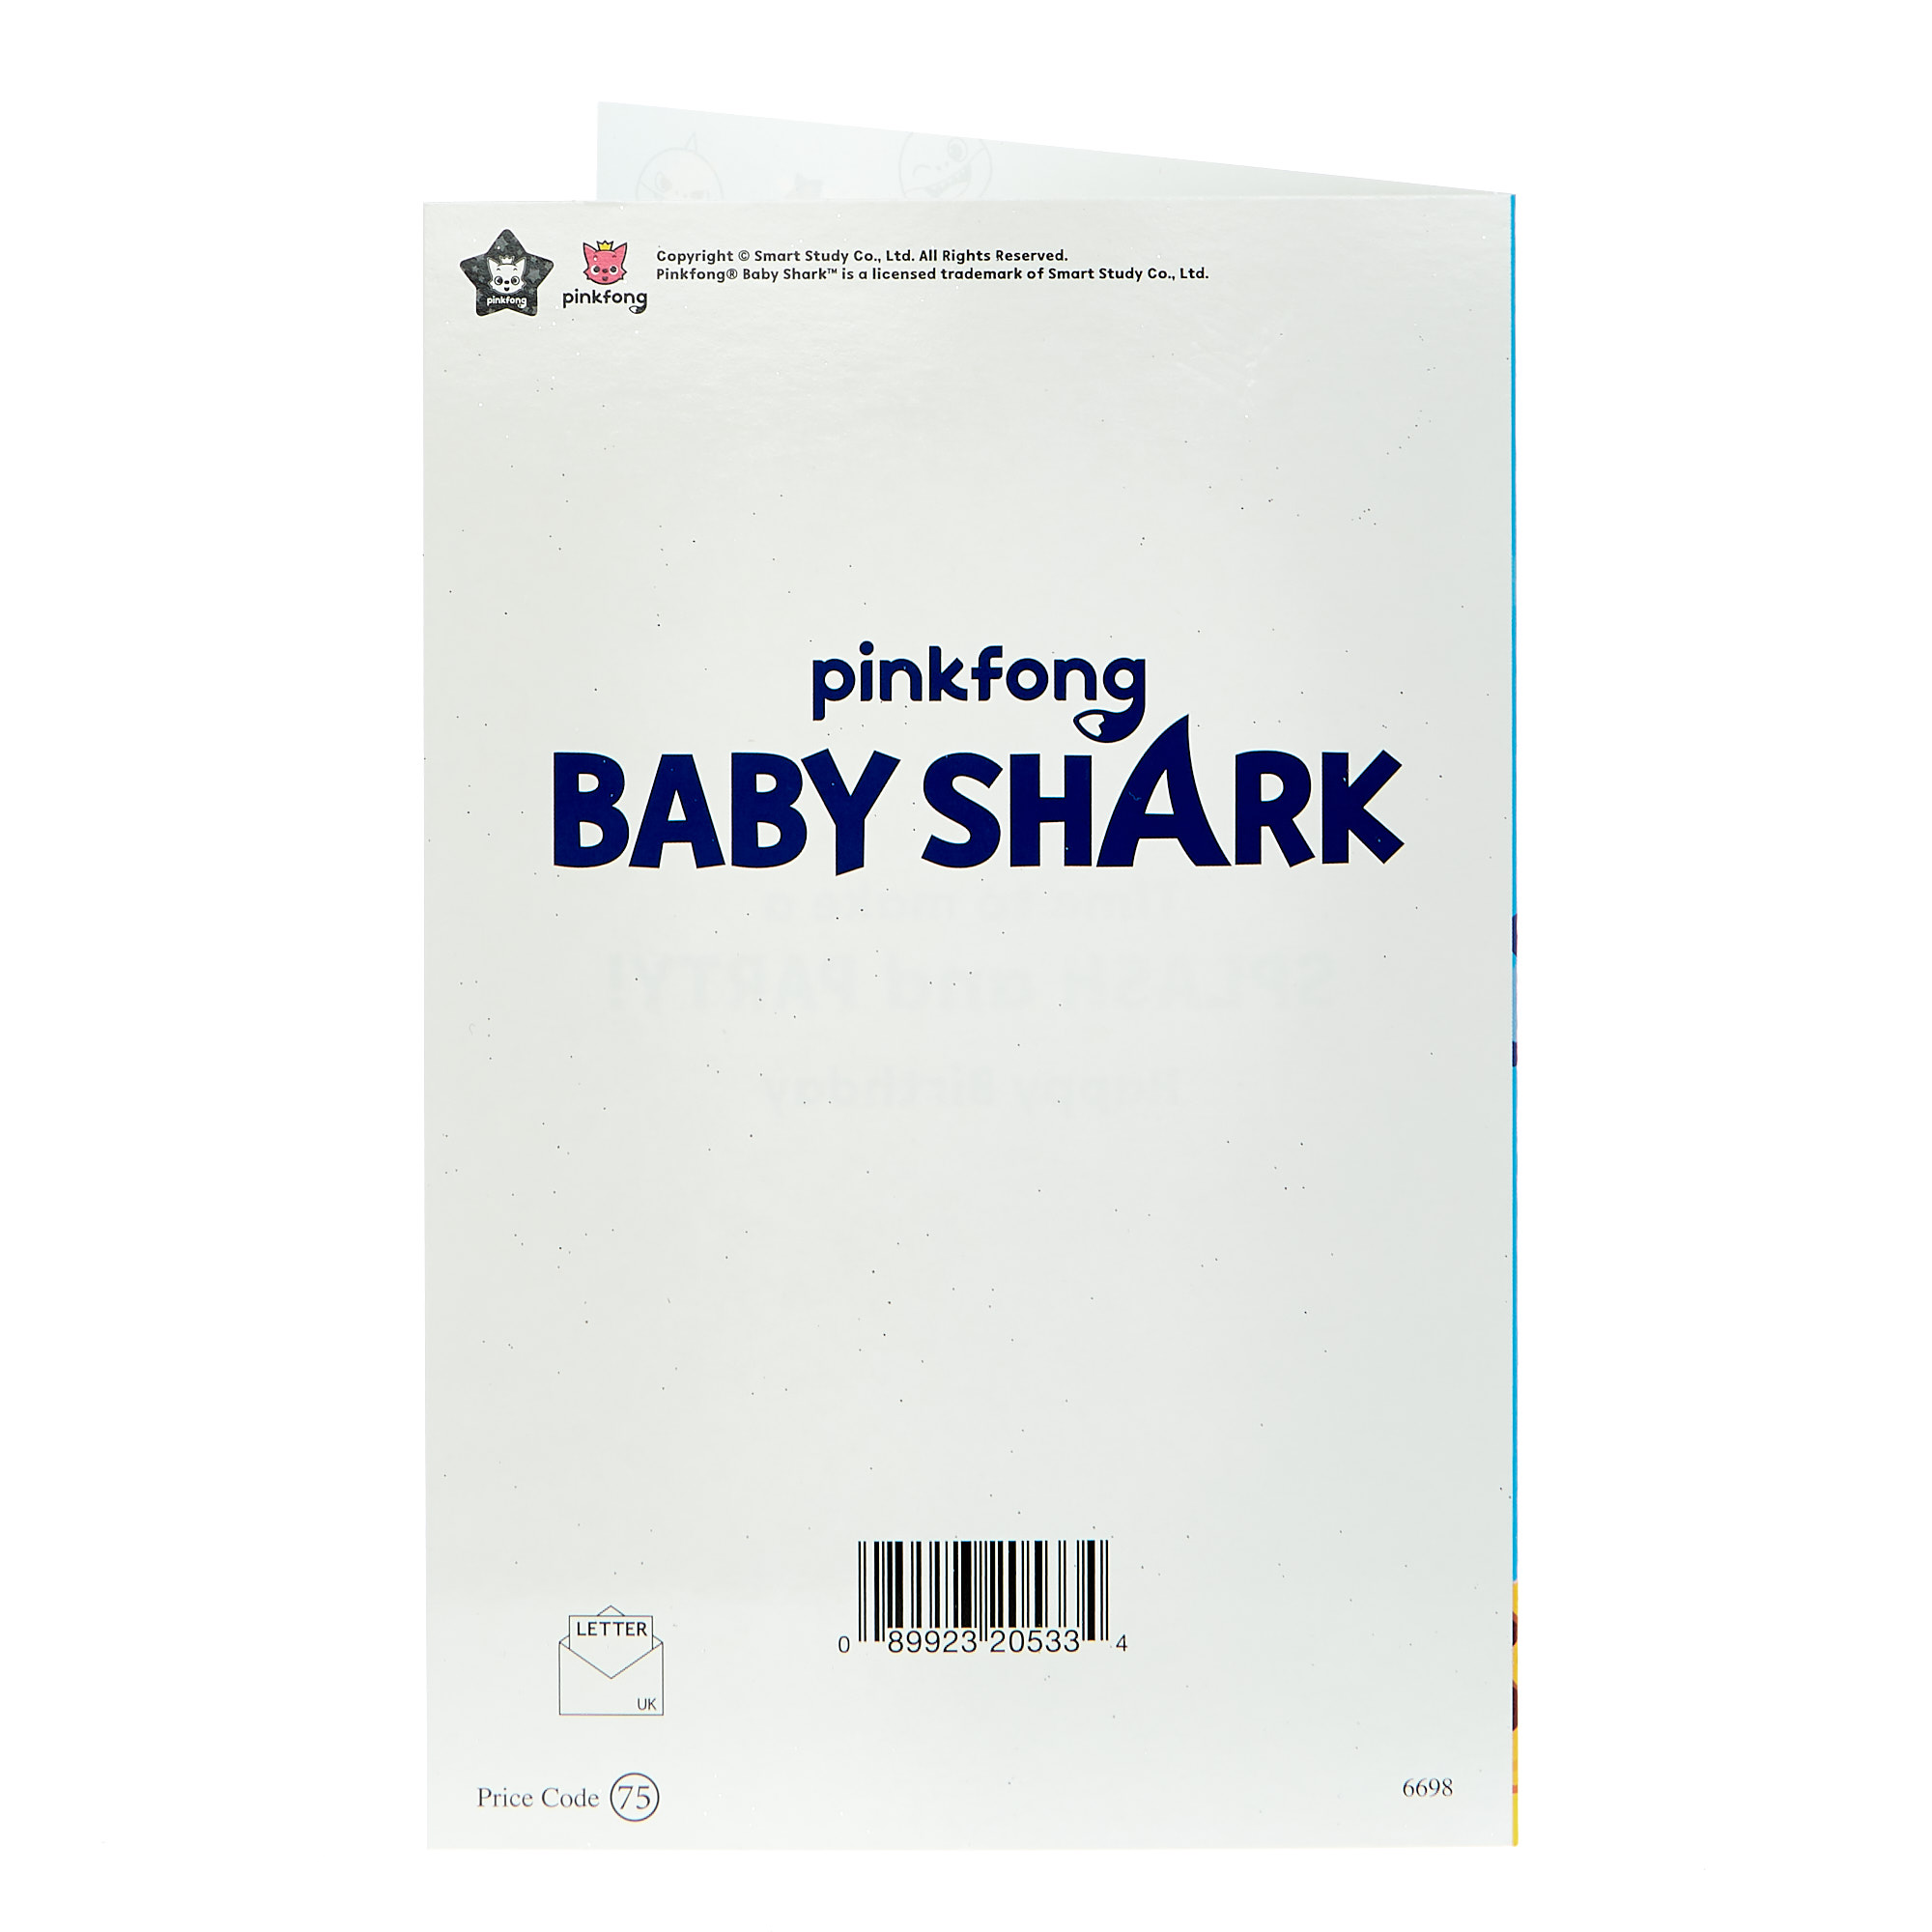 Baby Shark Birthday Card - Yippee!